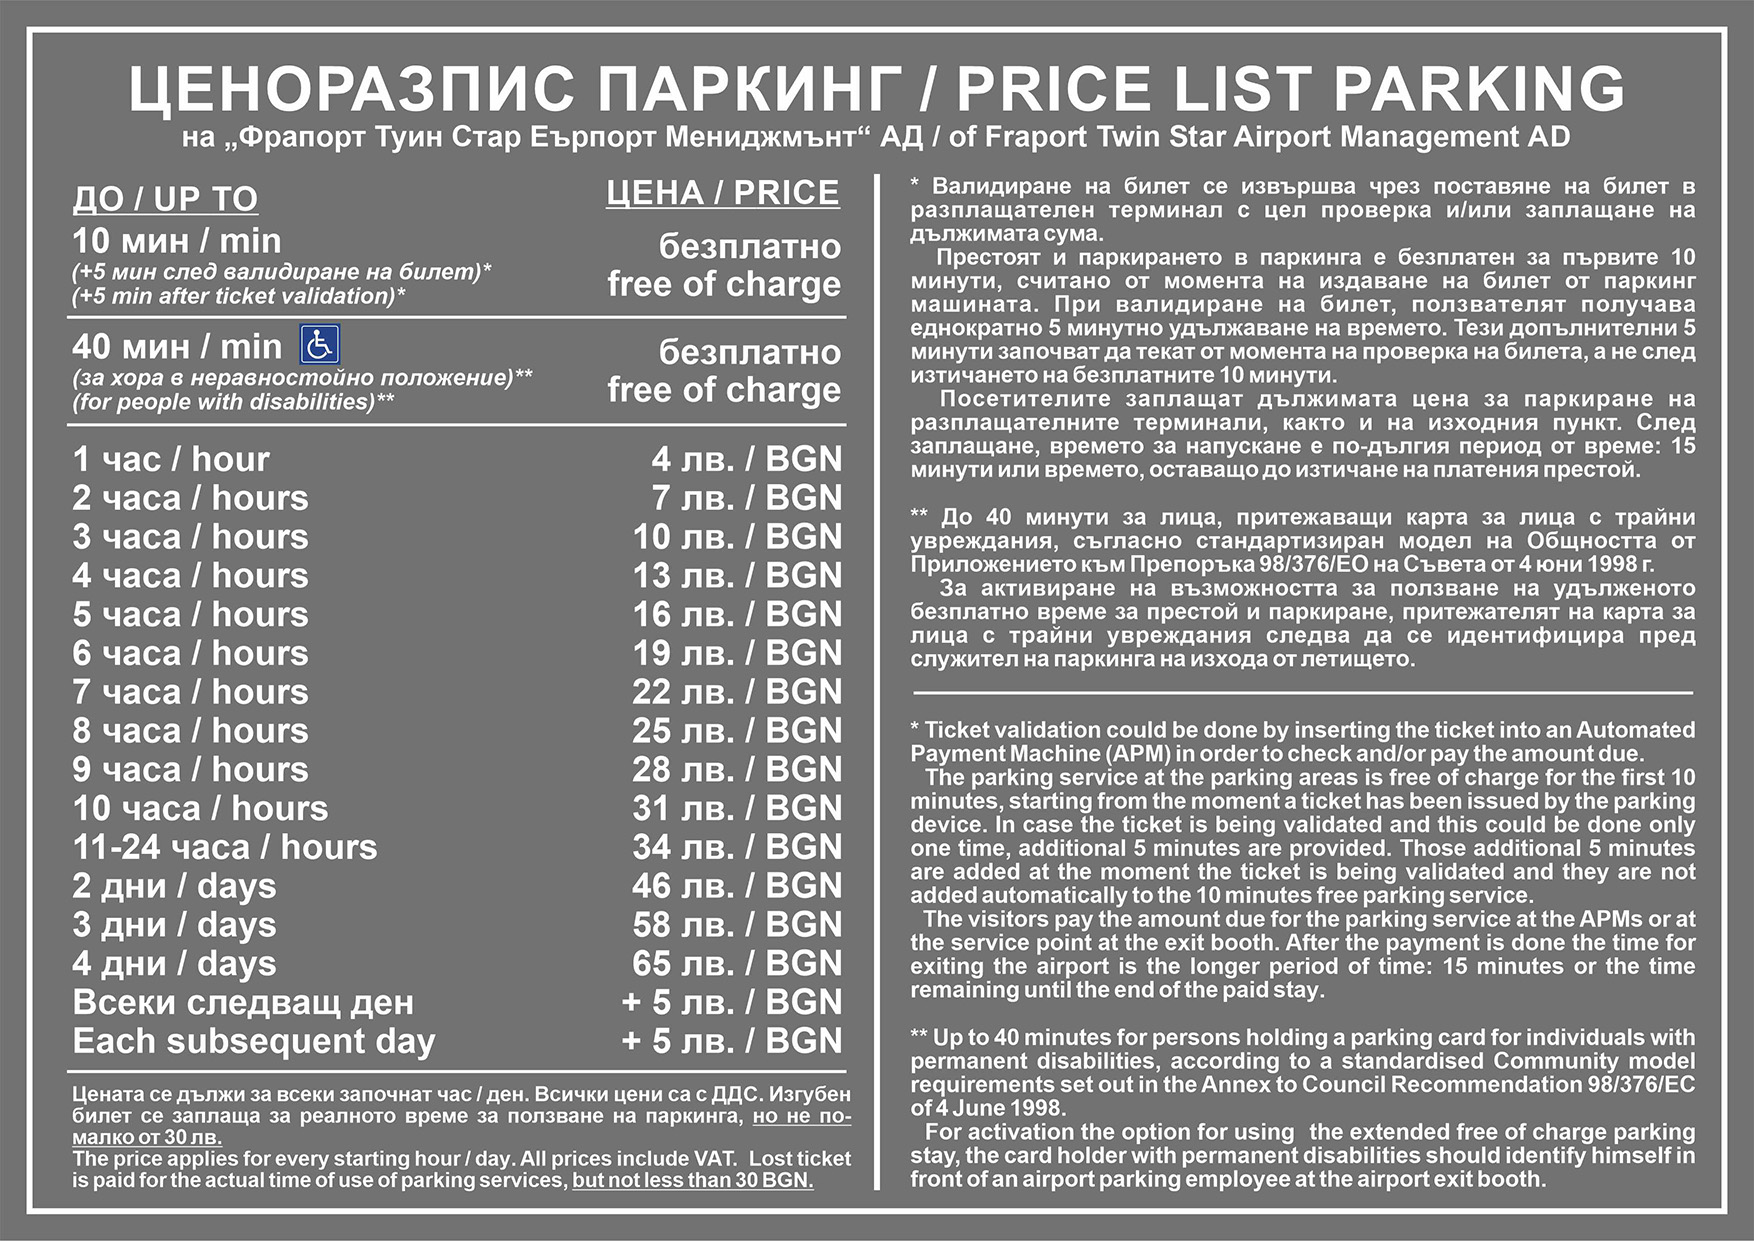 Price list parking BG